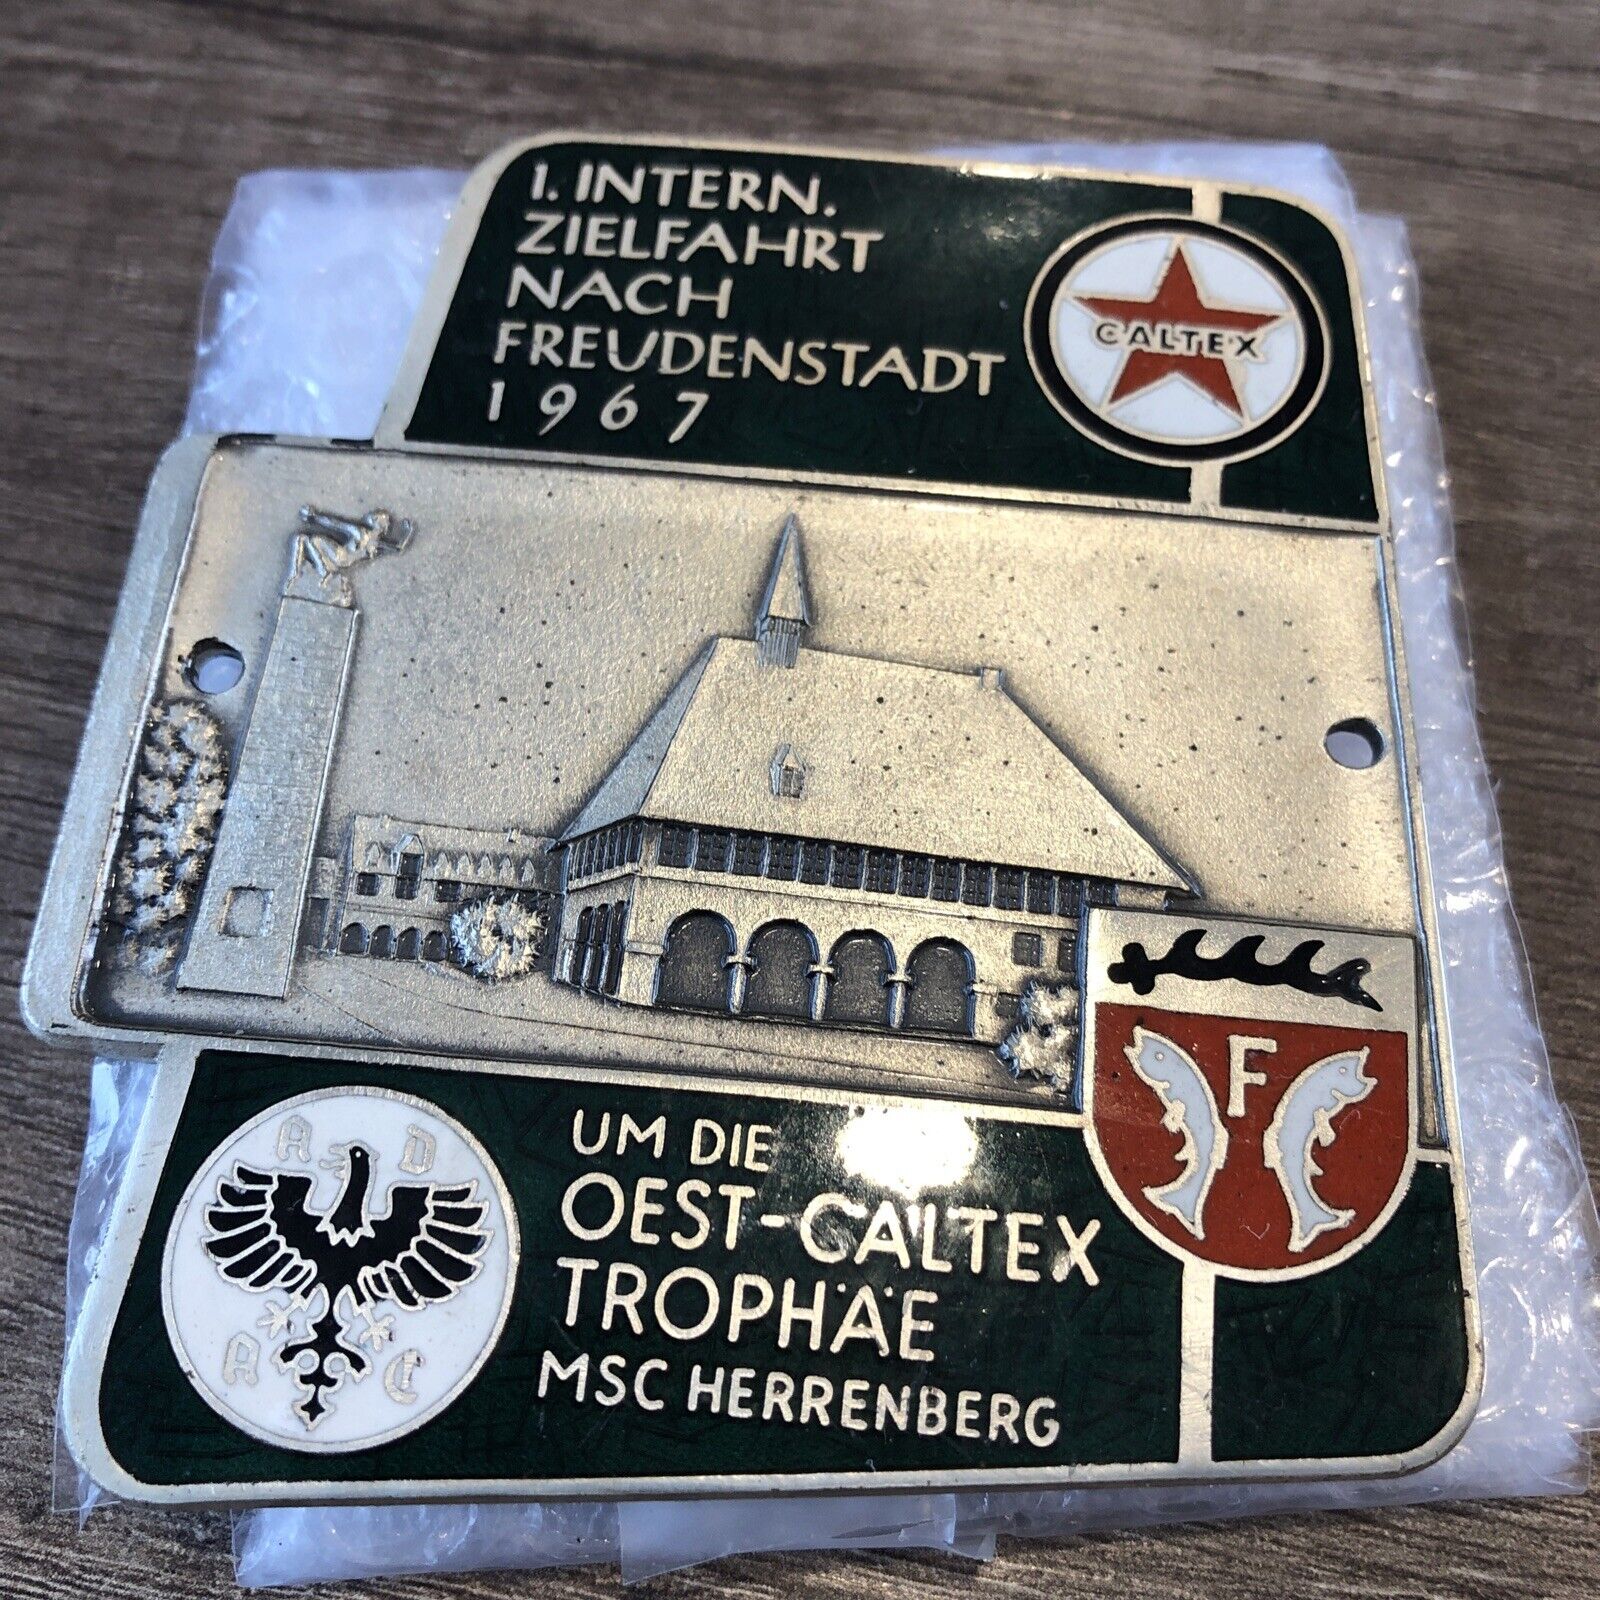 Awesome Grill badge Zielfahrt Freudenstadt 1967